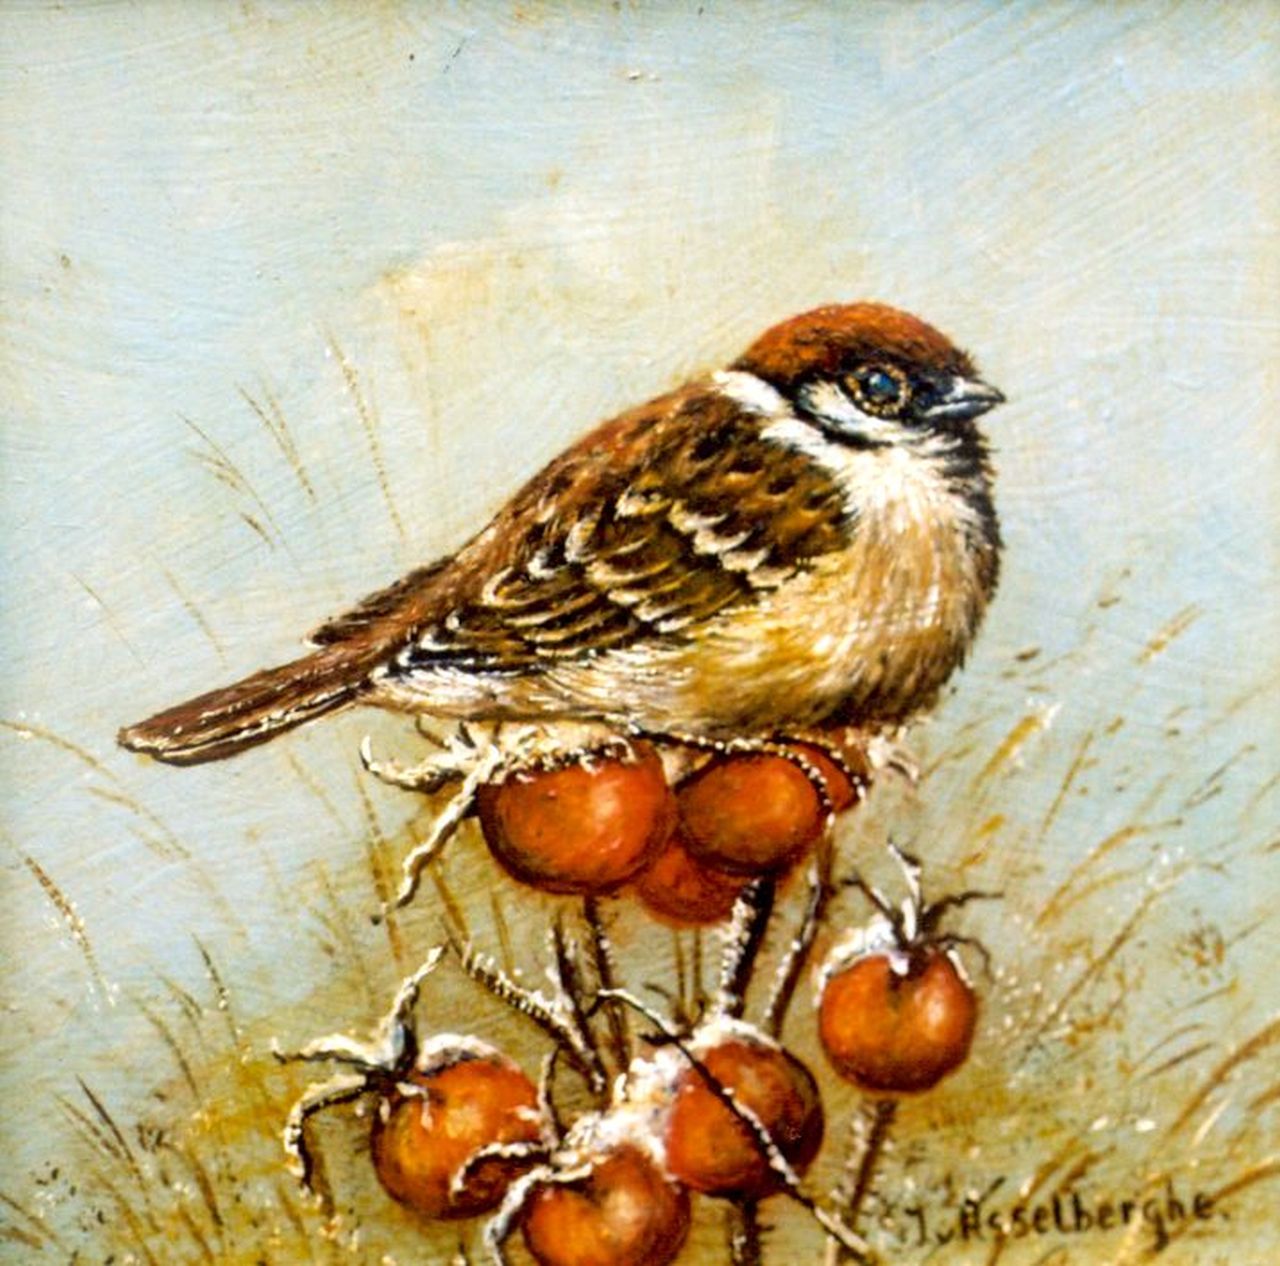 Asselberghe J. van | van Asselberghe, A Tree sparrow, Öl auf Holz 13,0 x 13,0 cm, signed l.r.